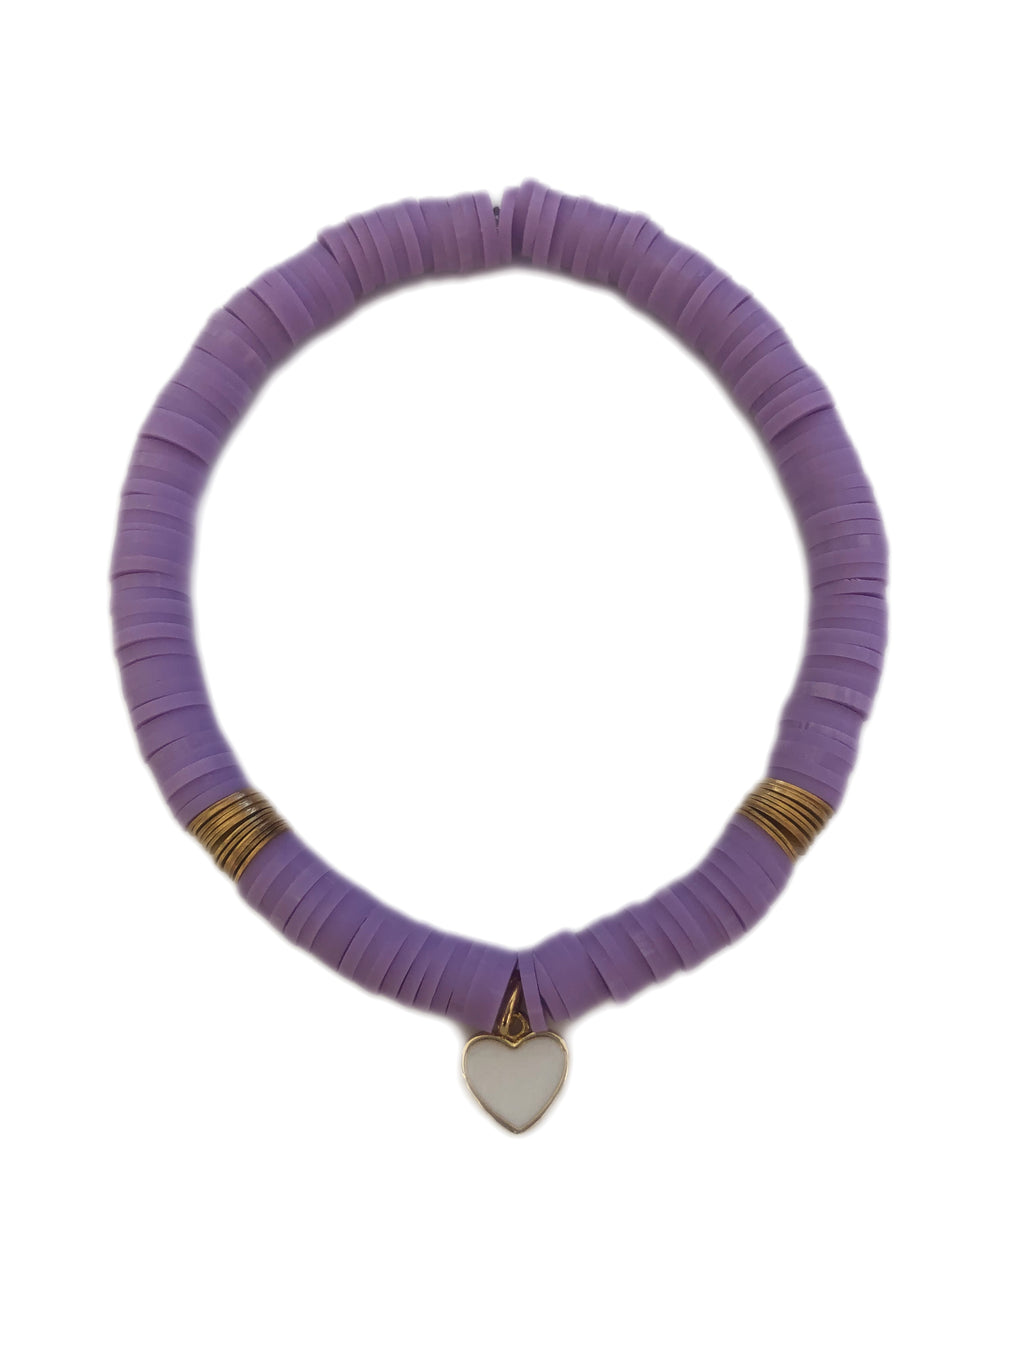 White Heart Charm & Lavender Clay Disc Bracelet